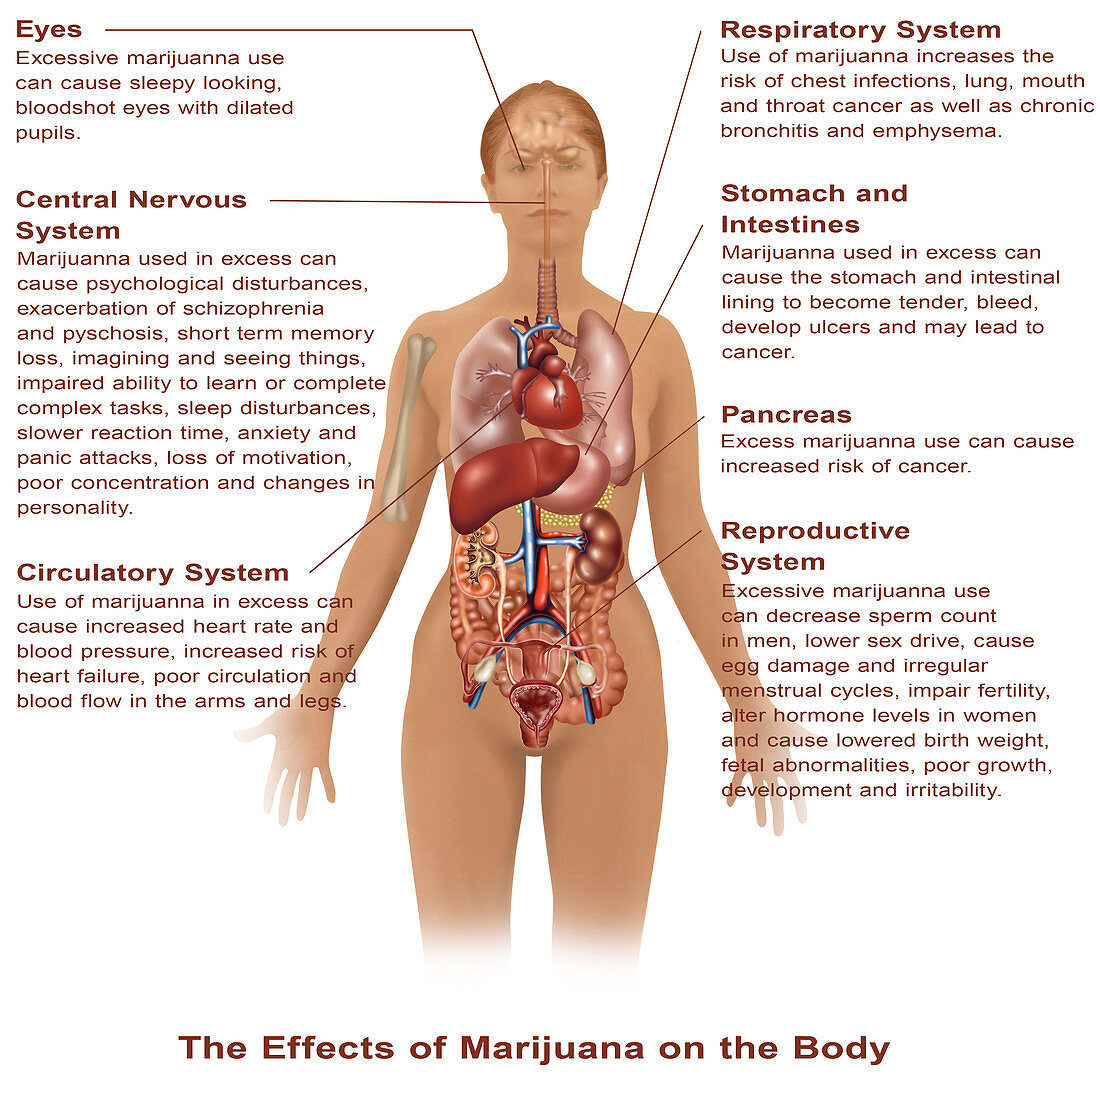 Effects of Marijuana Use